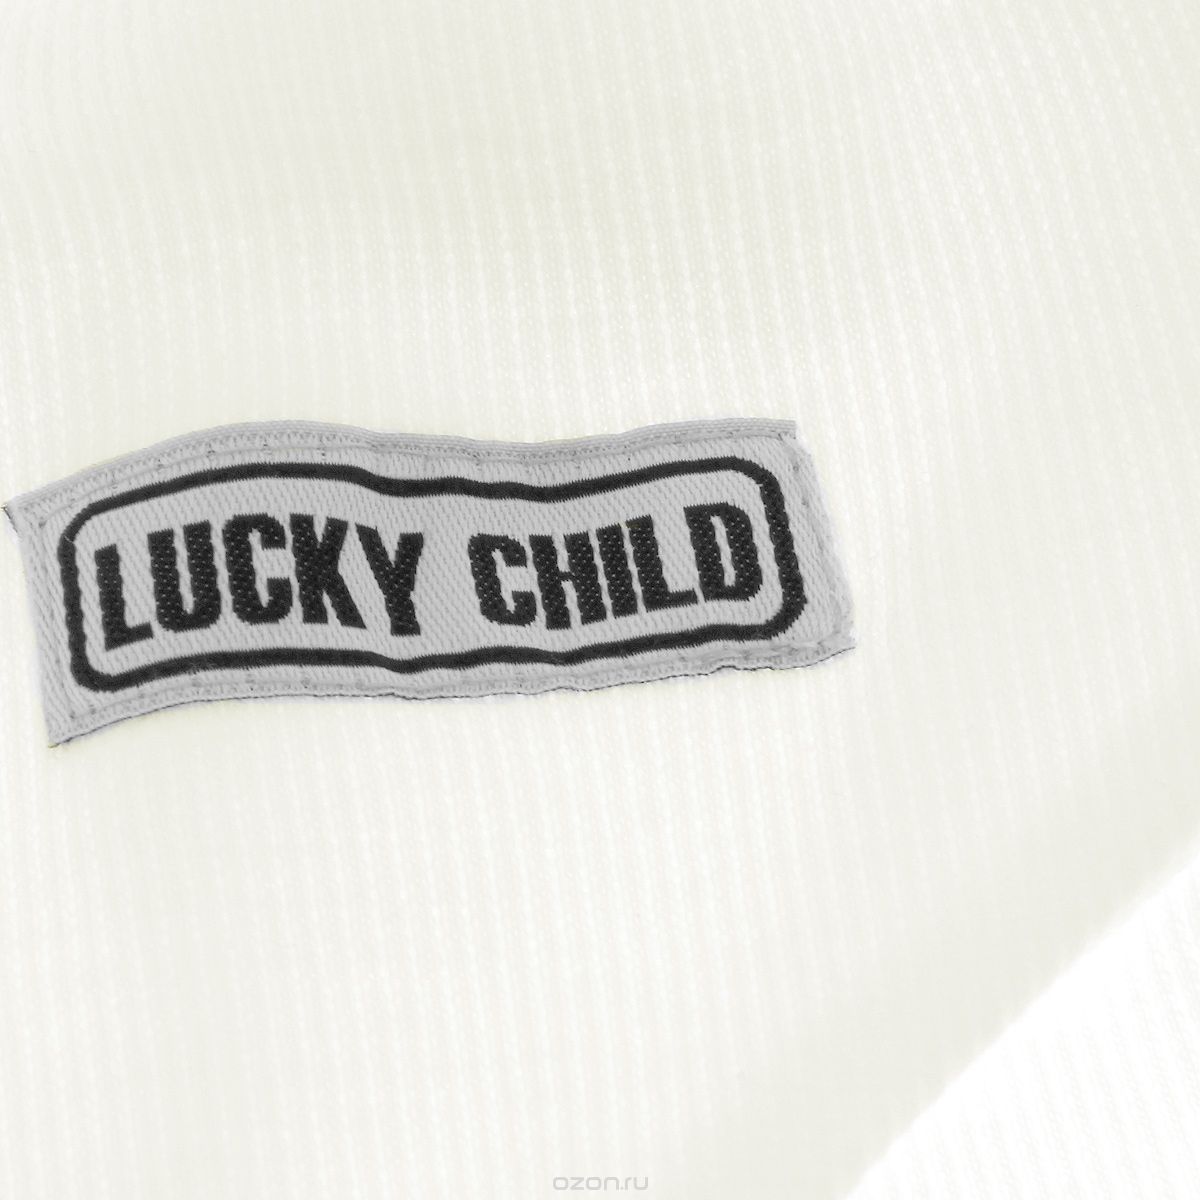   Lucky Child, : . 7-91.  47